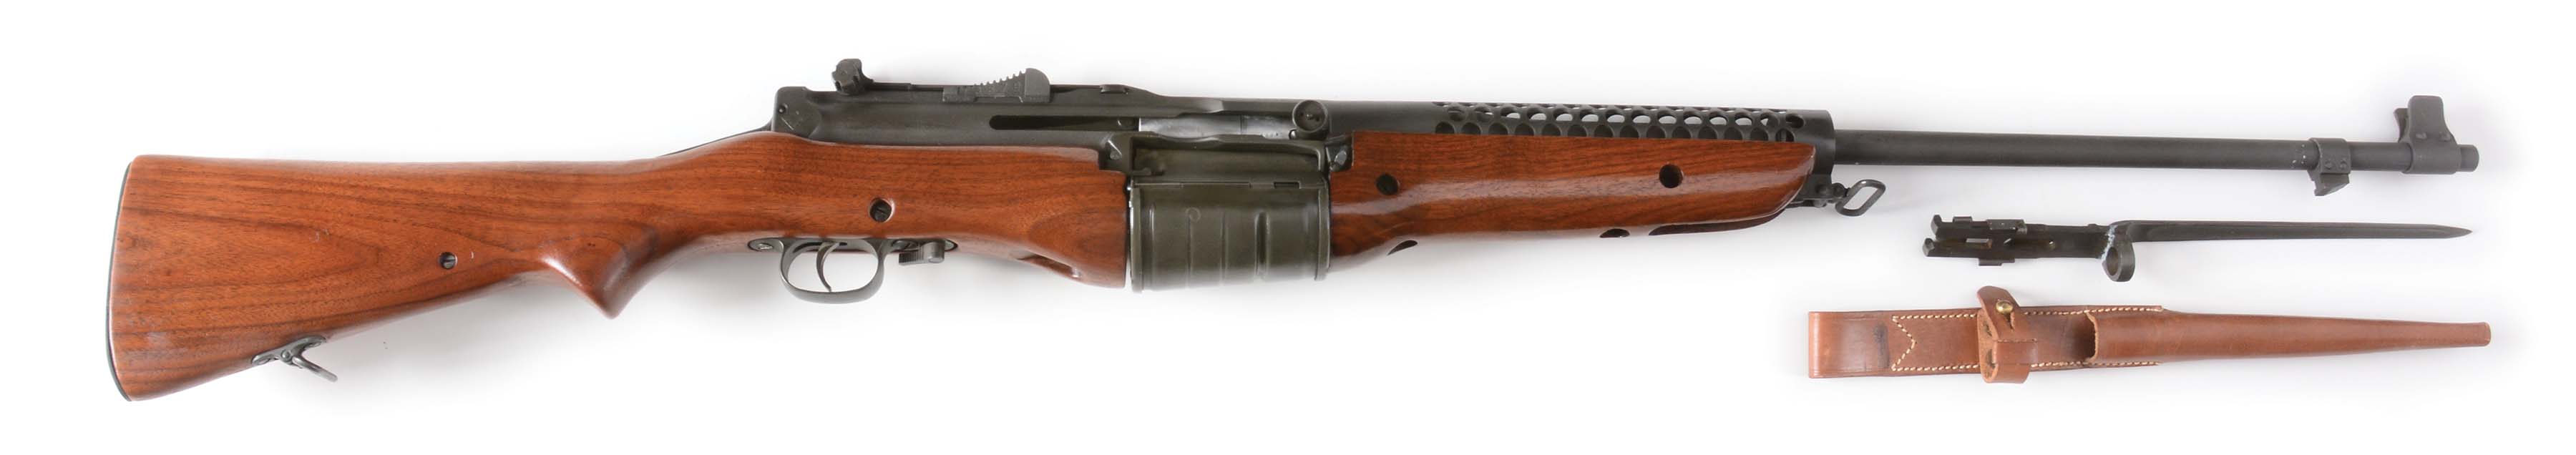 C Johnson Model Semi Automatic Rifle With Bayonet Auctions | Hot Sex ...